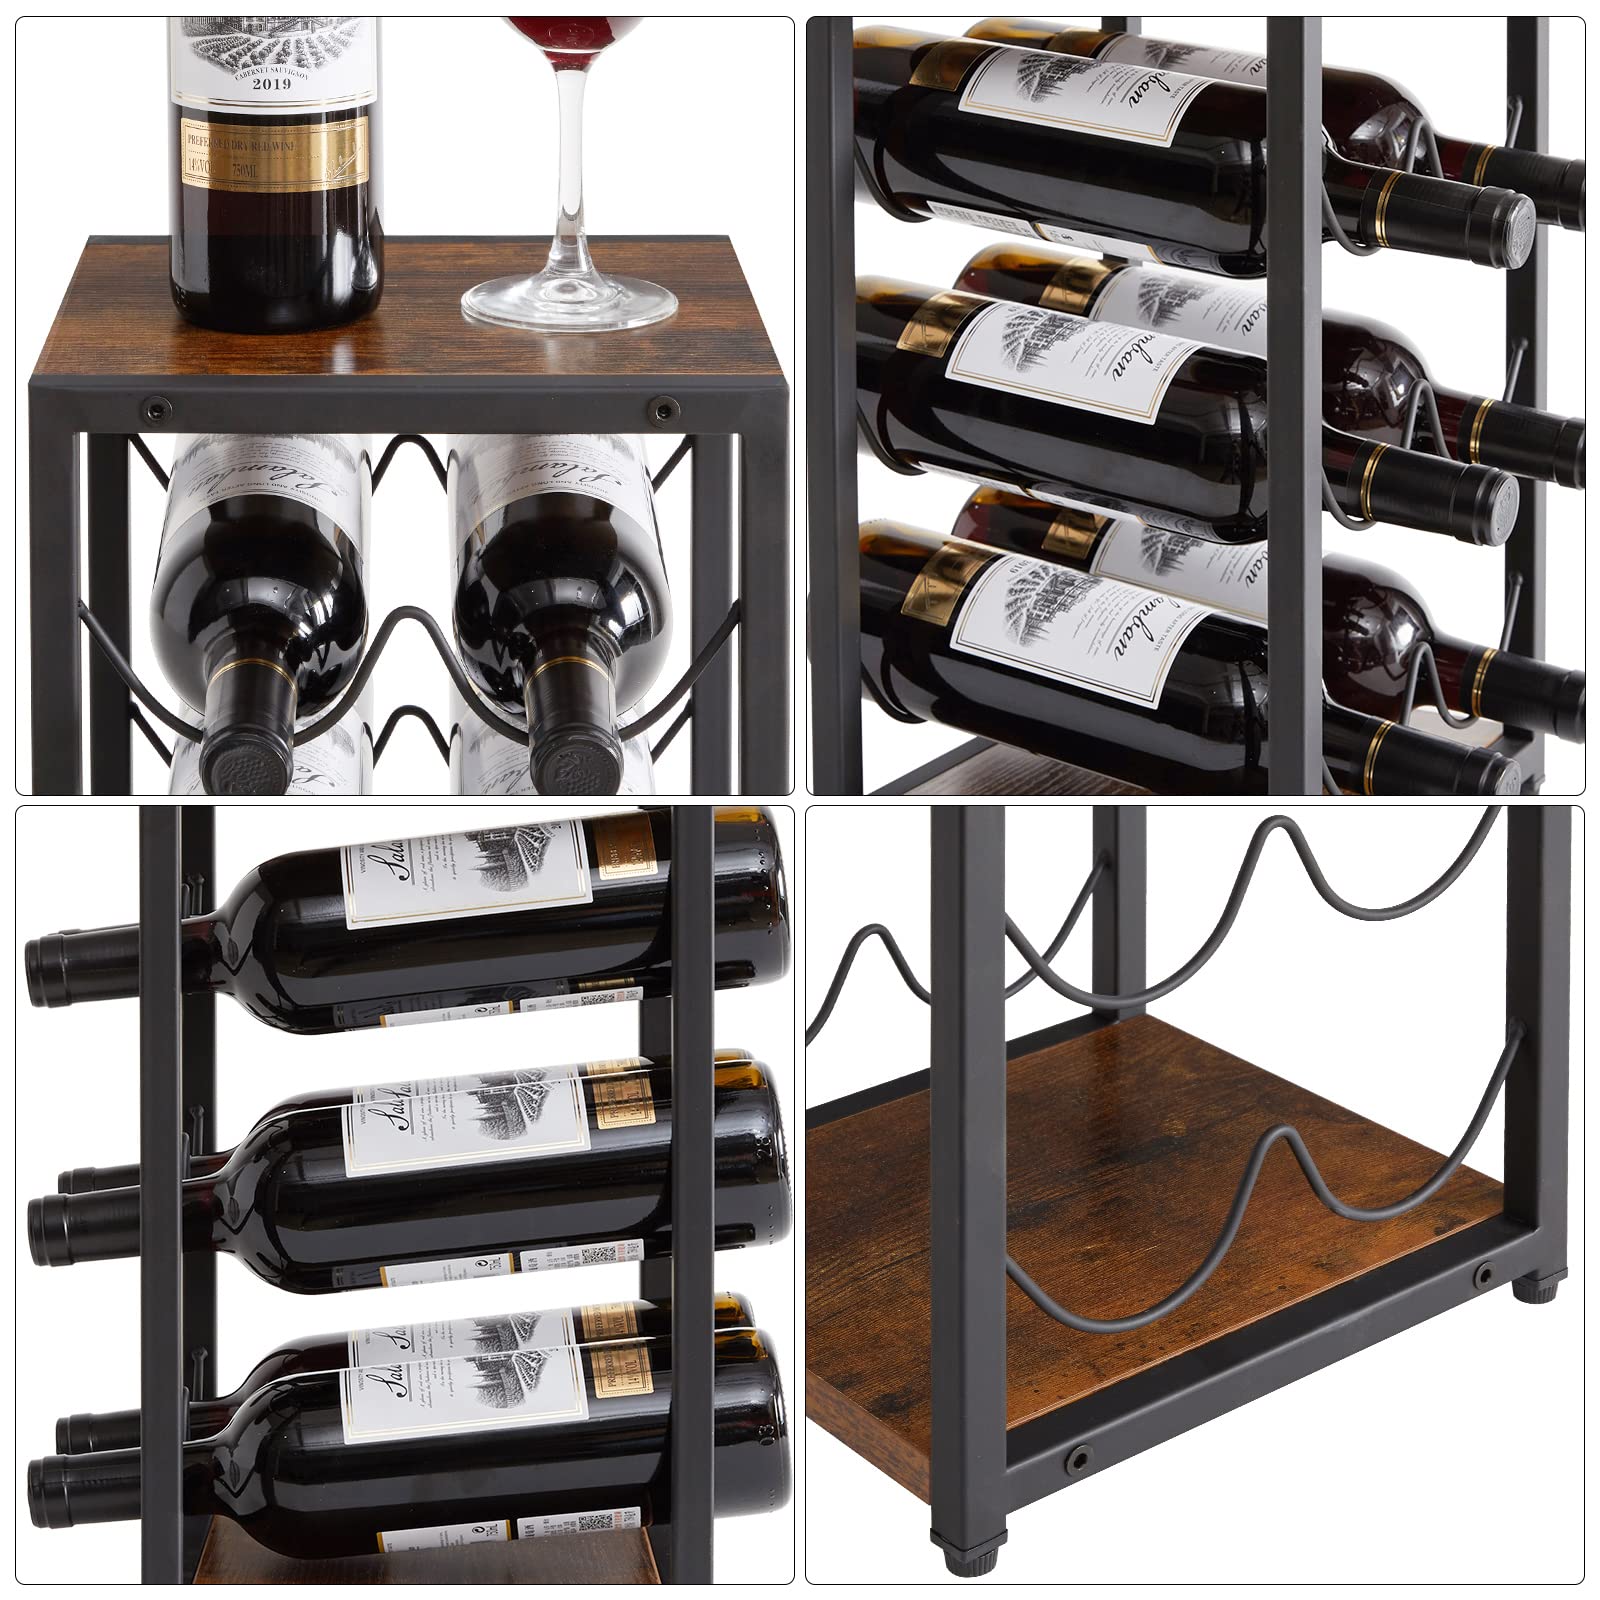 IBUYKE 6 Bottle Metal Wine Rack, Free Standing Wine Storage Holder for Horizontal Storage, 3-Tier Industrial Style Vintage Home Decorations for Cabinet, Cupboard, Countertop TMJ901H